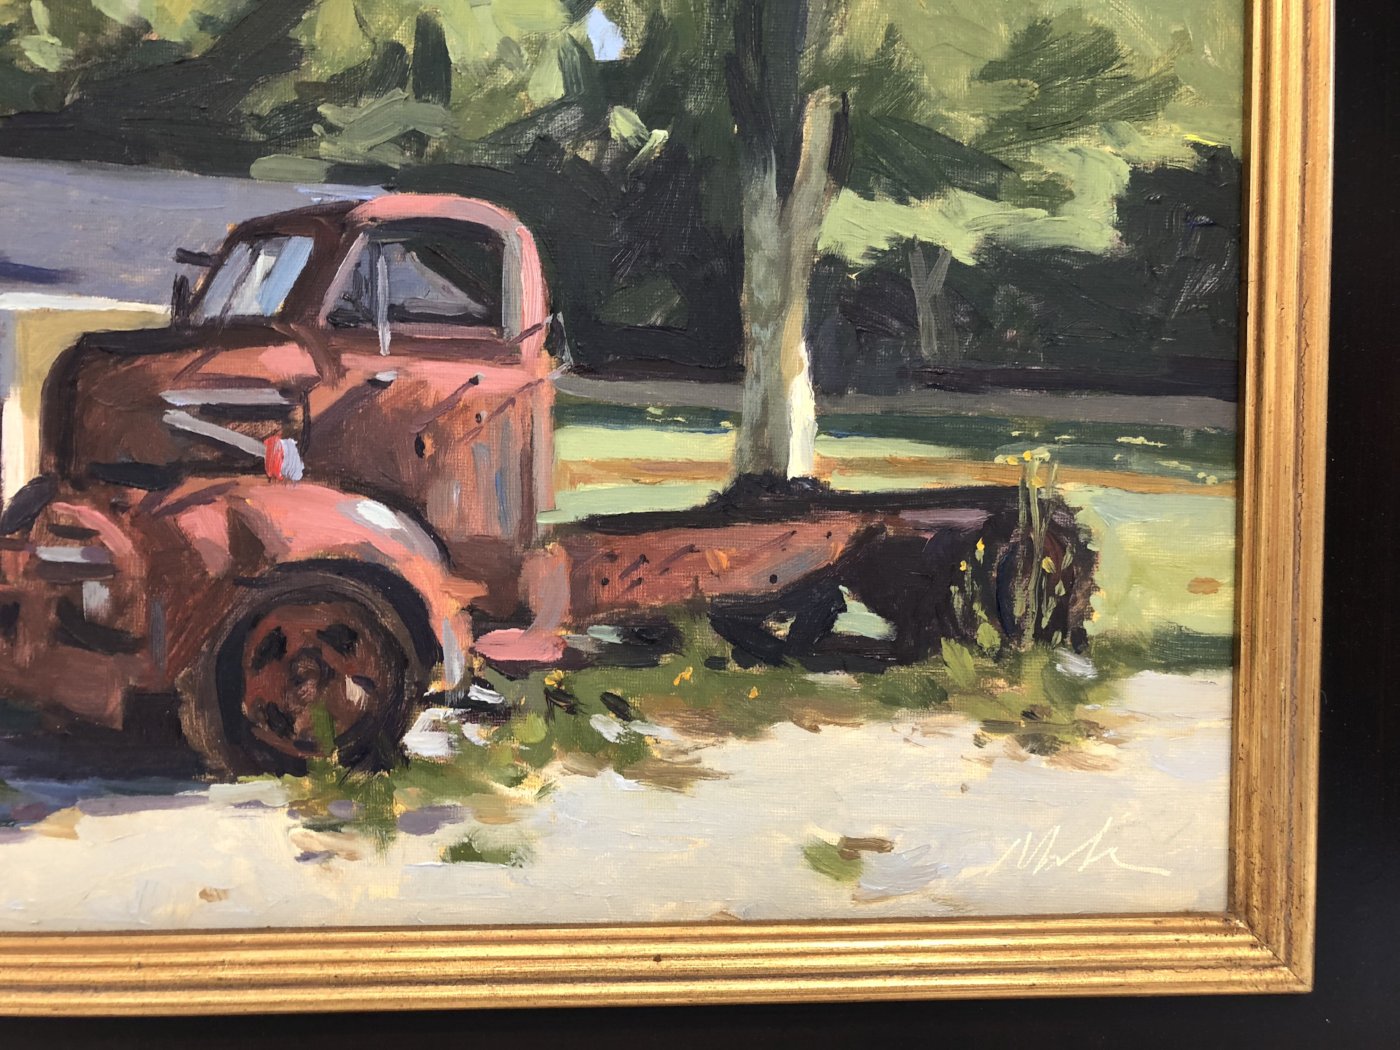 Original Oil Painting by Robert Abele - Farm Truck